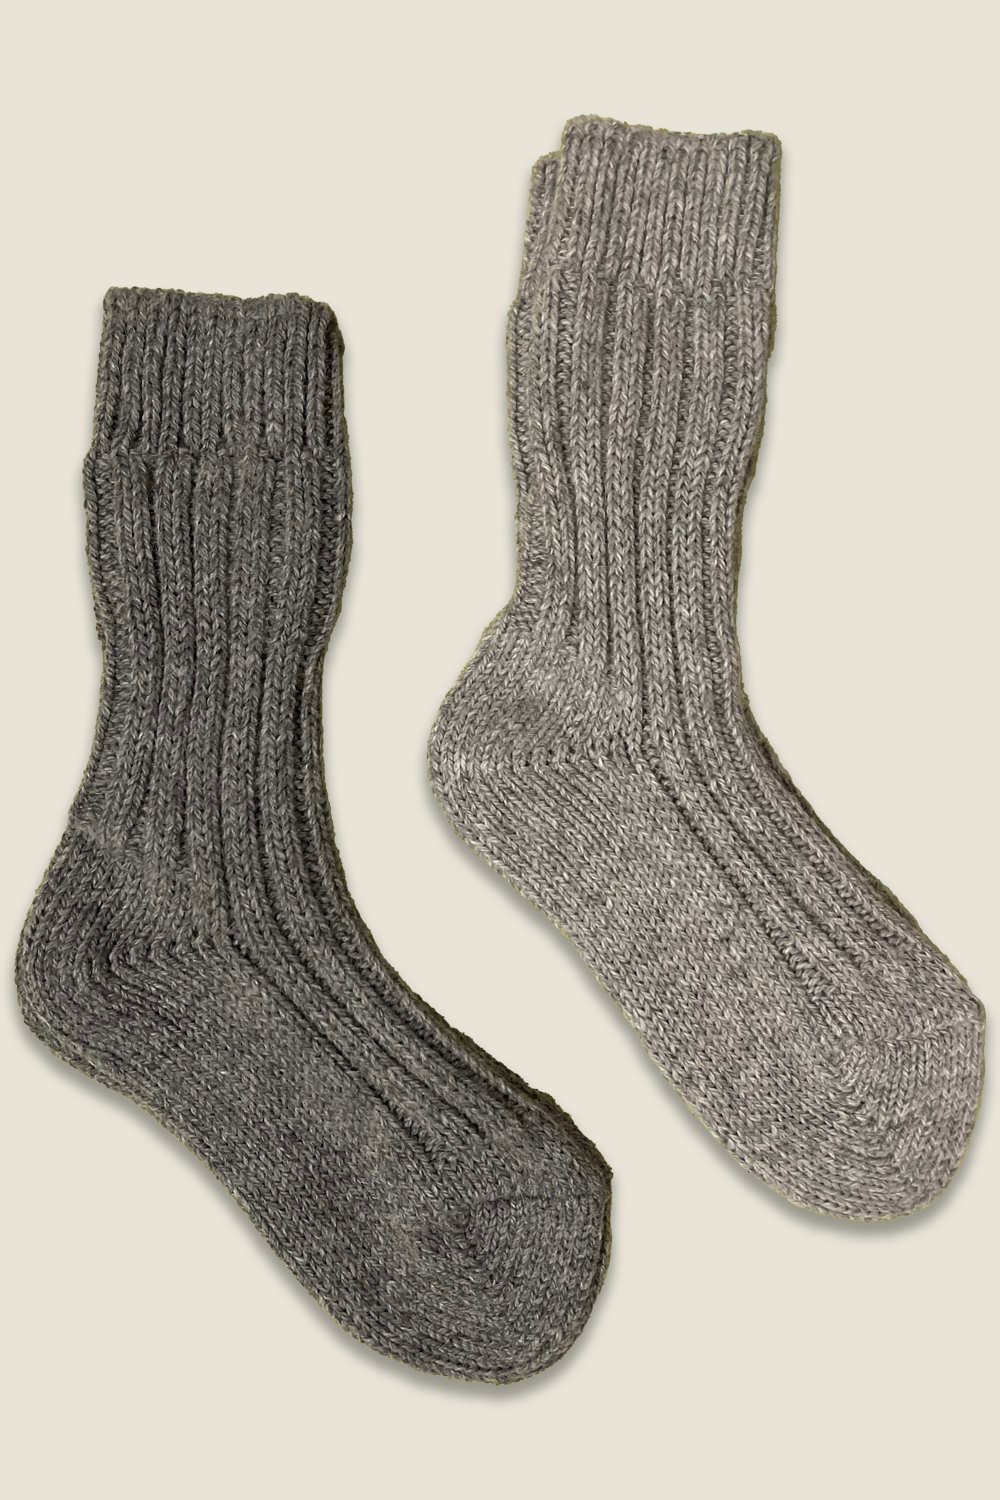 Alpaca Socks - grey and dark grey - 2 pairs